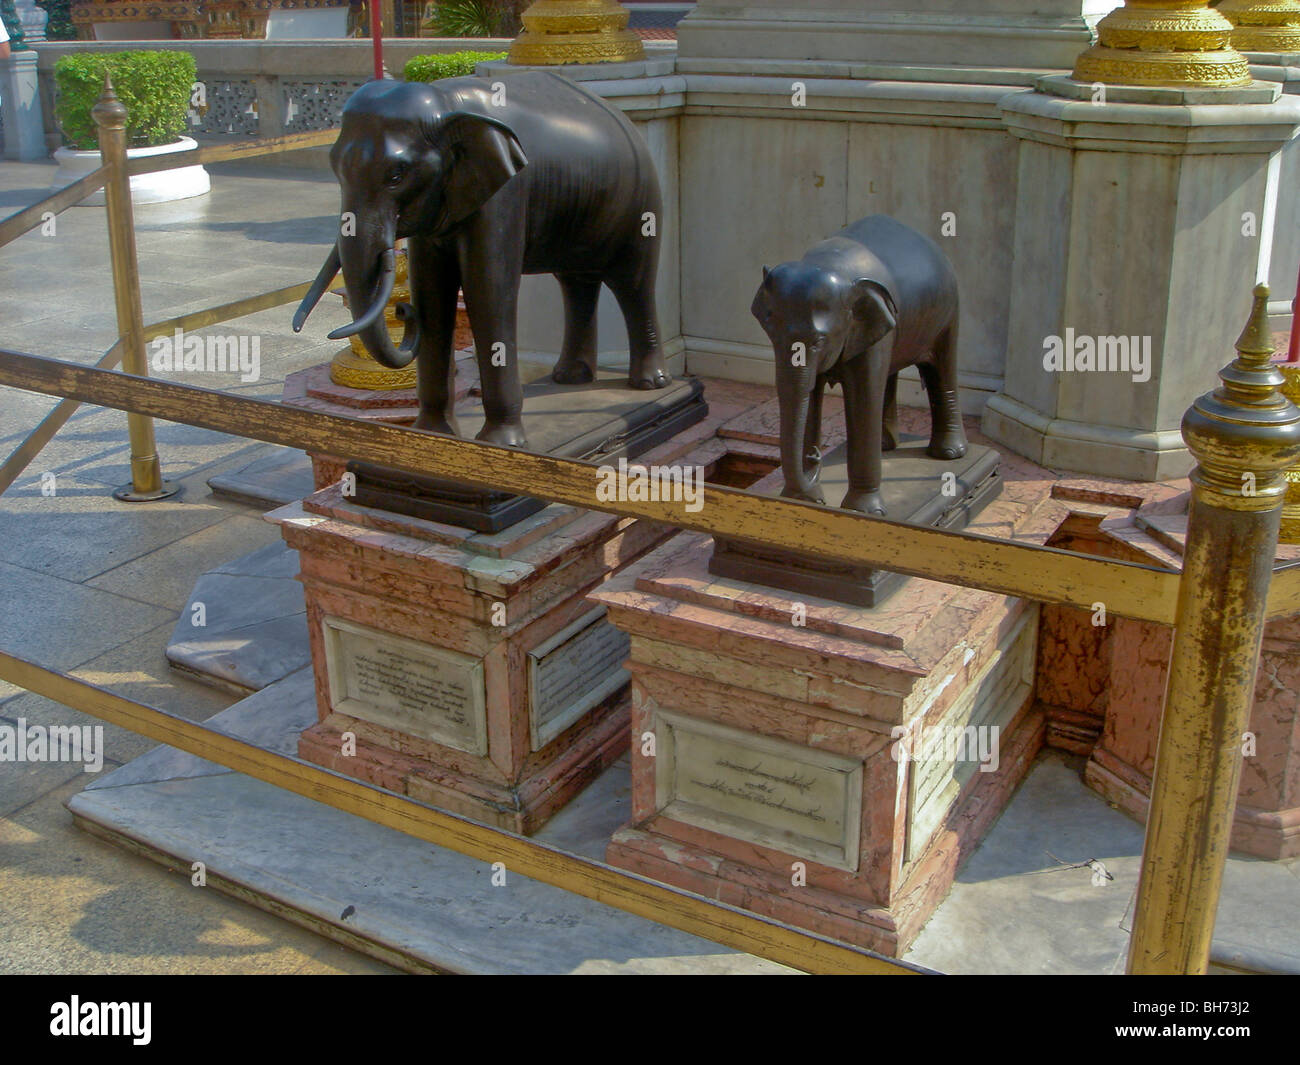 Bangkok, Thailandia, Royal Palace, esterno, tempio Wat, dettaglio sculture di elefante Foto Stock